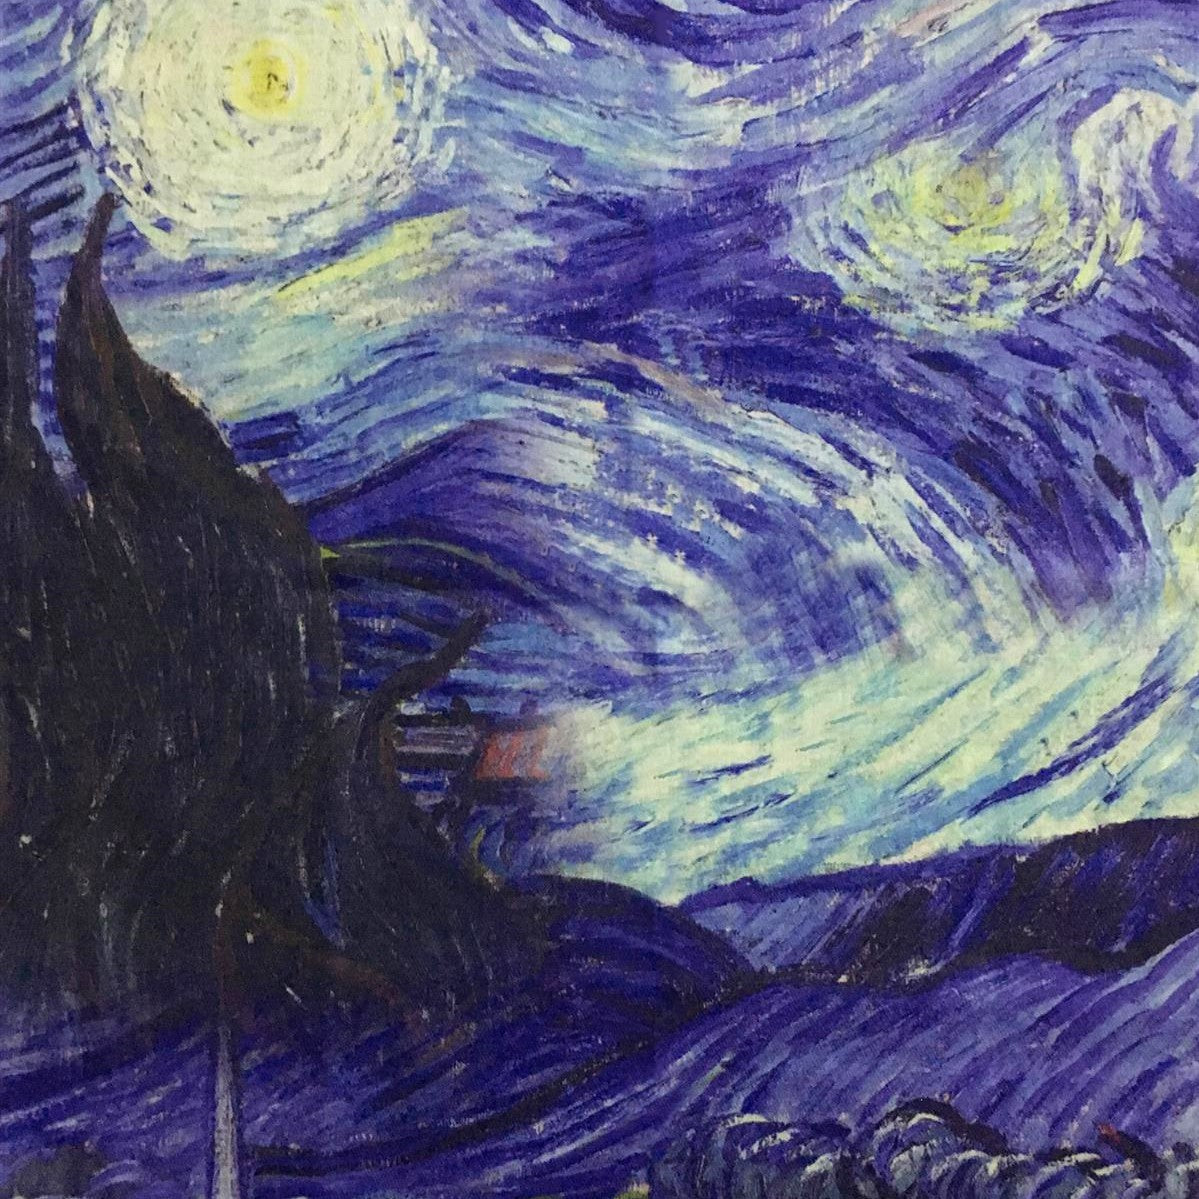 Vlnený šál-šatka, 70 cm x 180 cm, Van Gogh - Starry Night